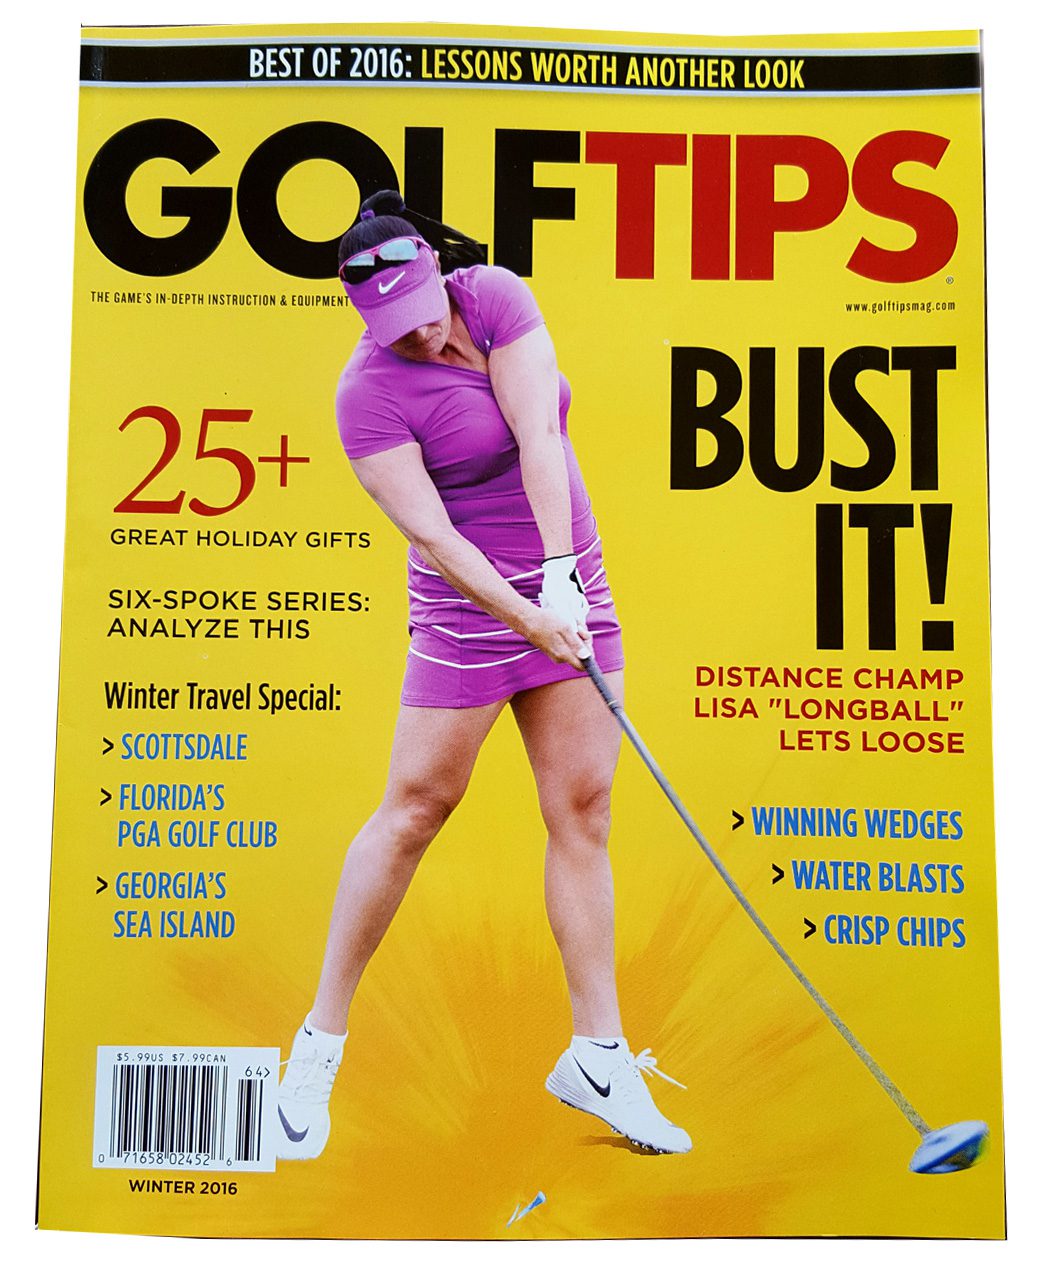 Lisa Longball Makes the Cover of Golf Tips Magazine